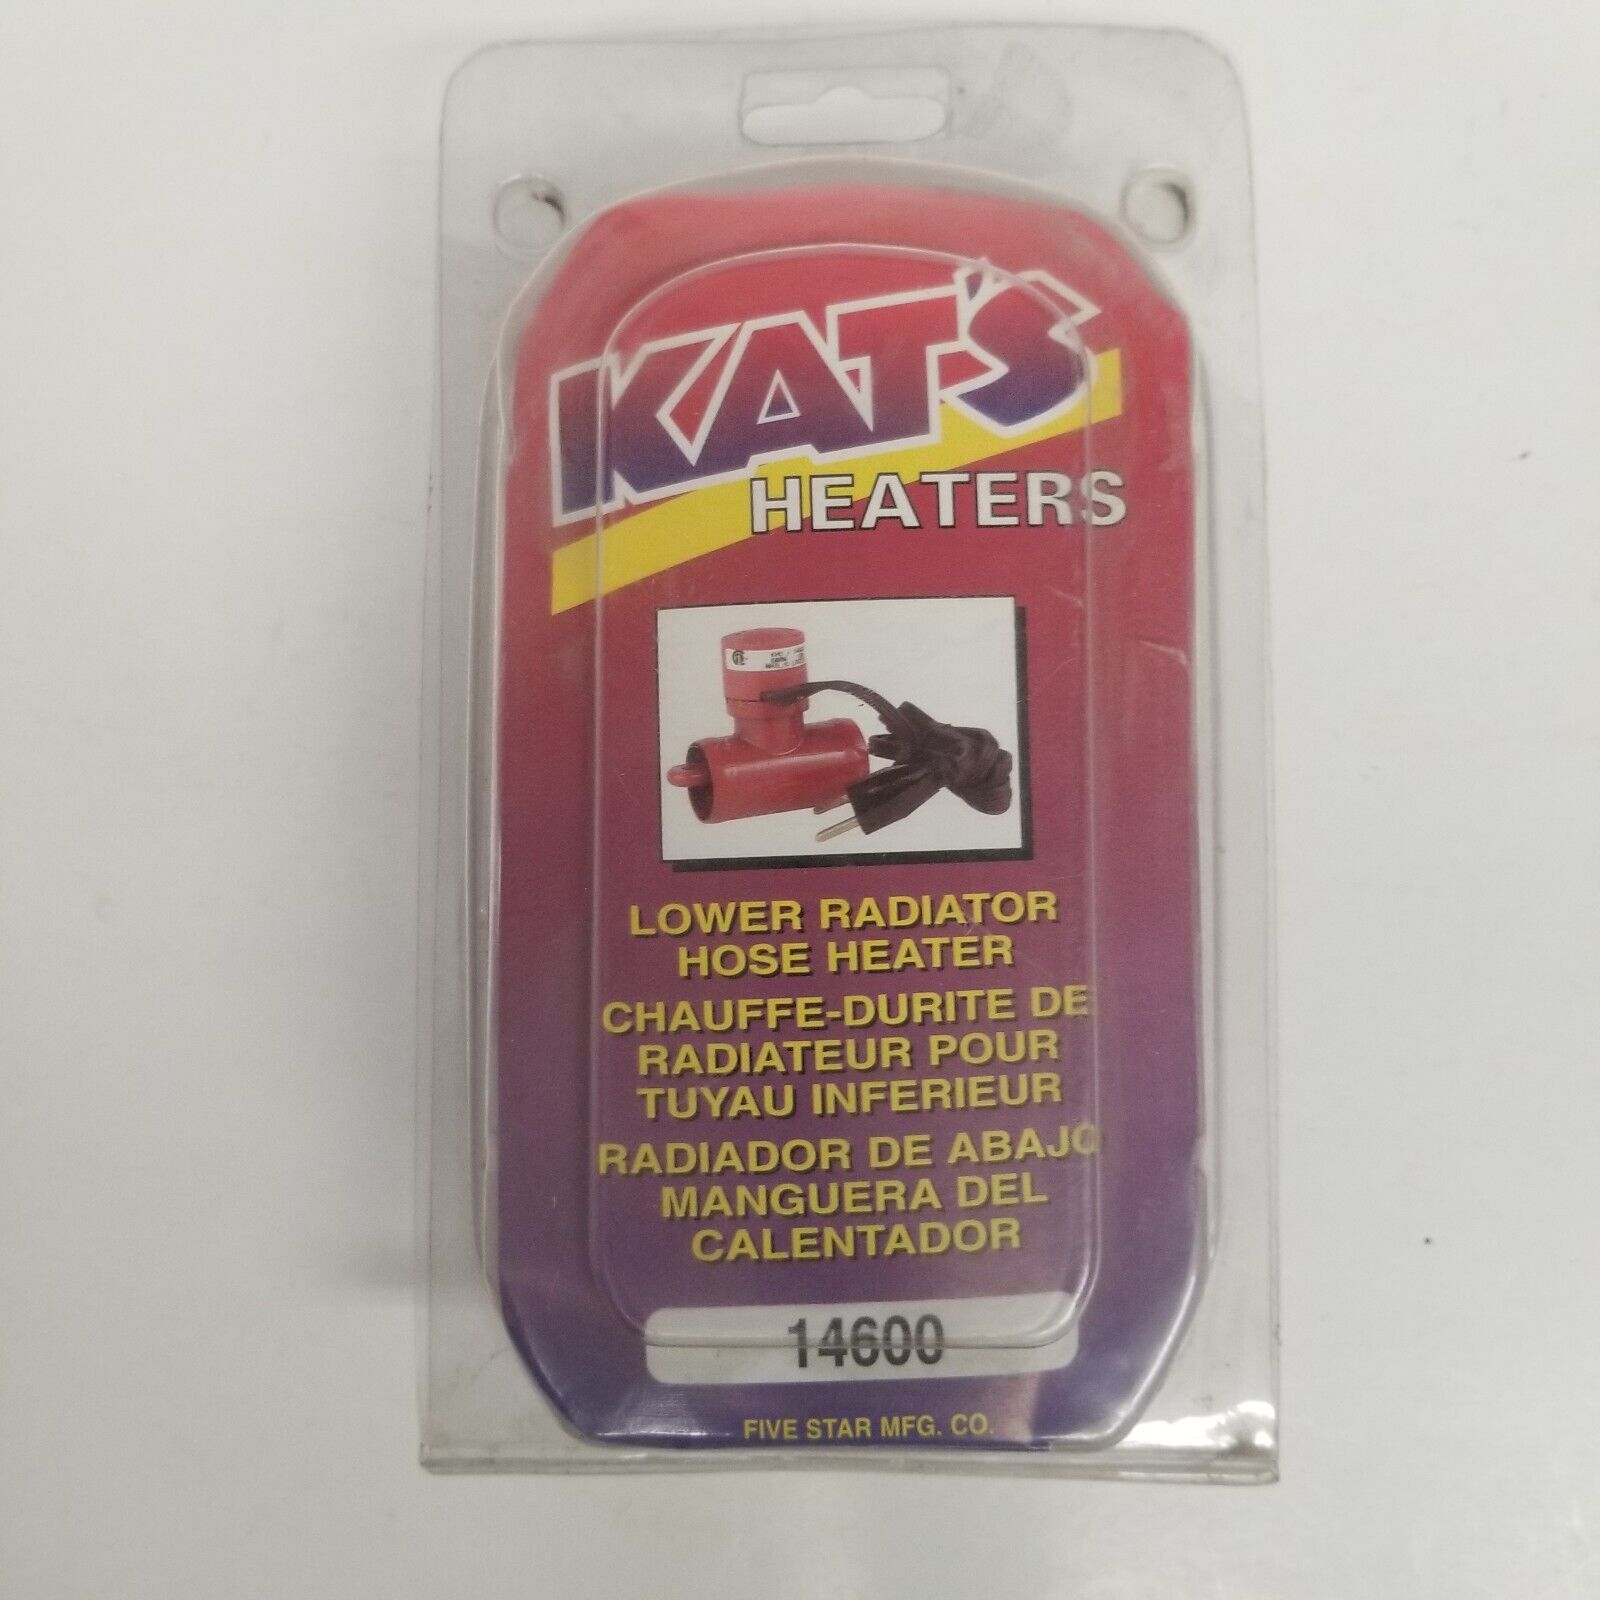 Kat\'s Heaters Lower Radiator Hose Heater Model 14600, New